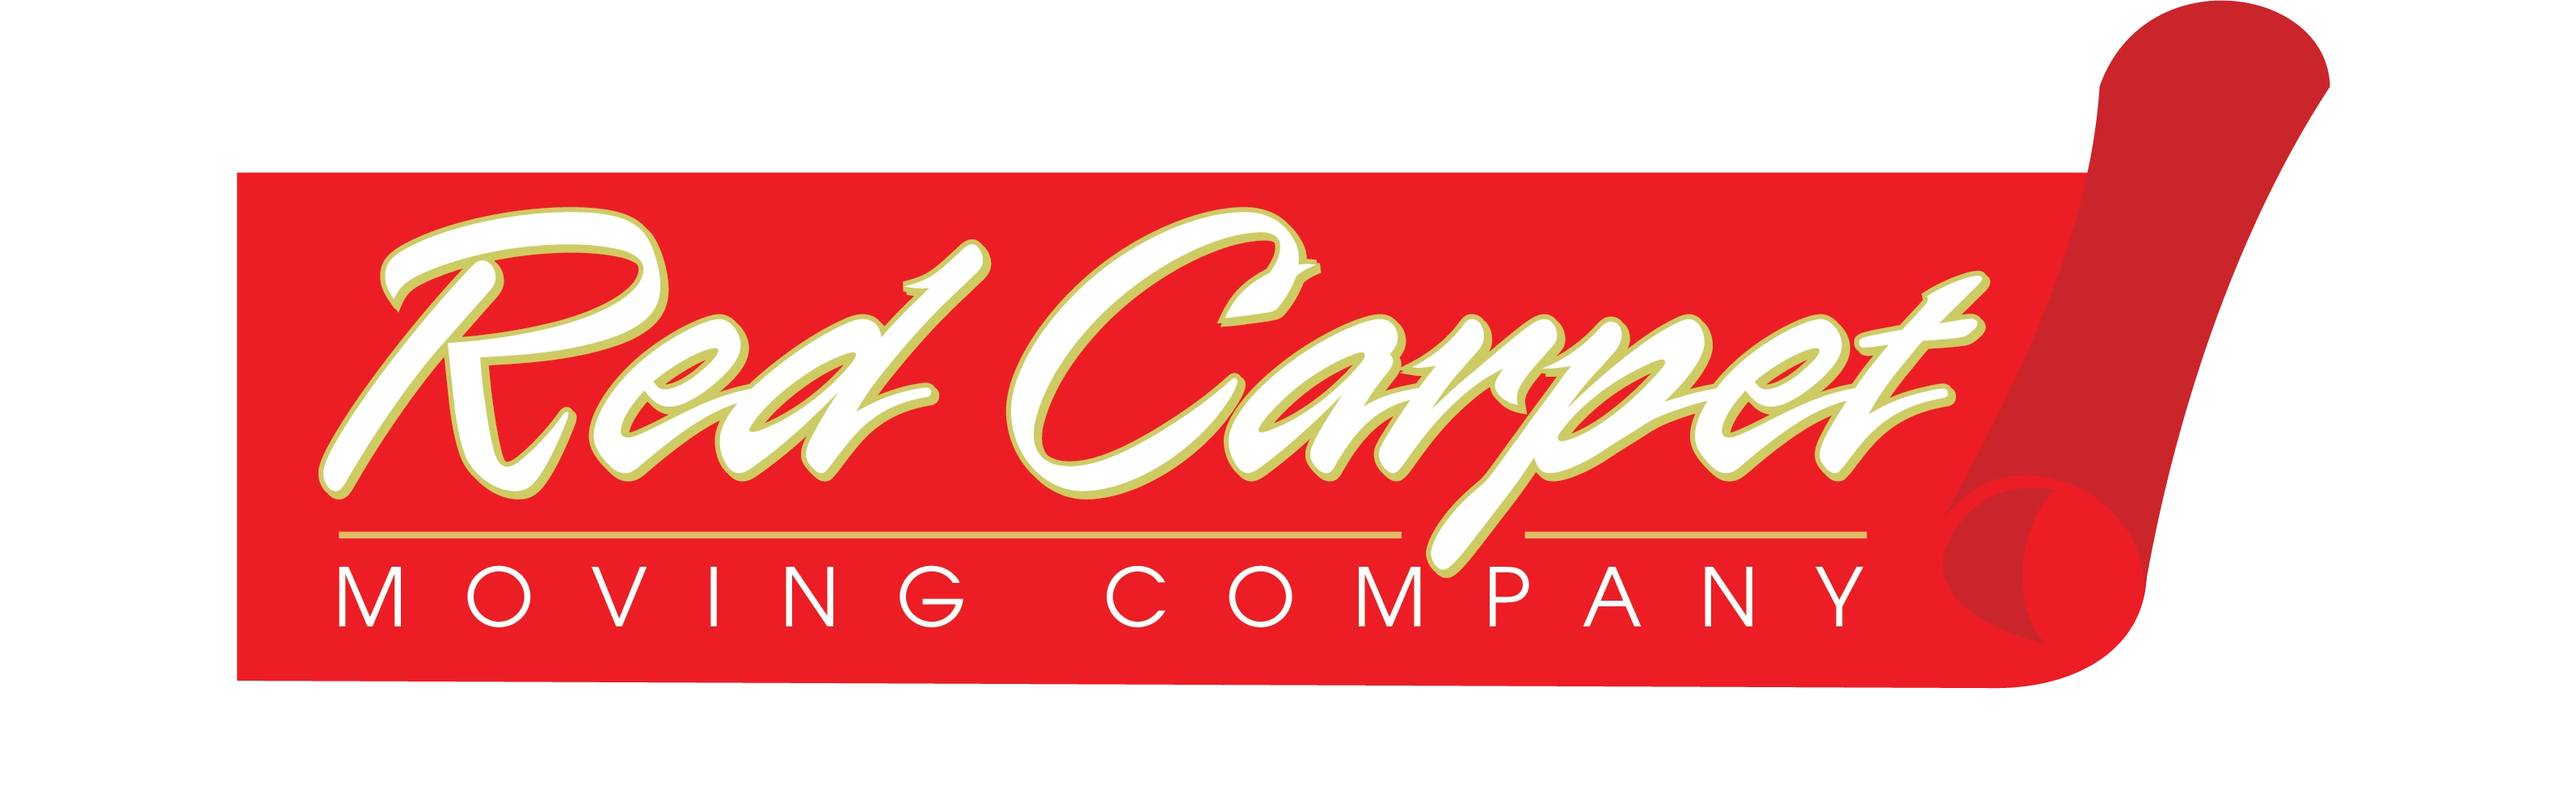 Red Carpet Moving Company Logo